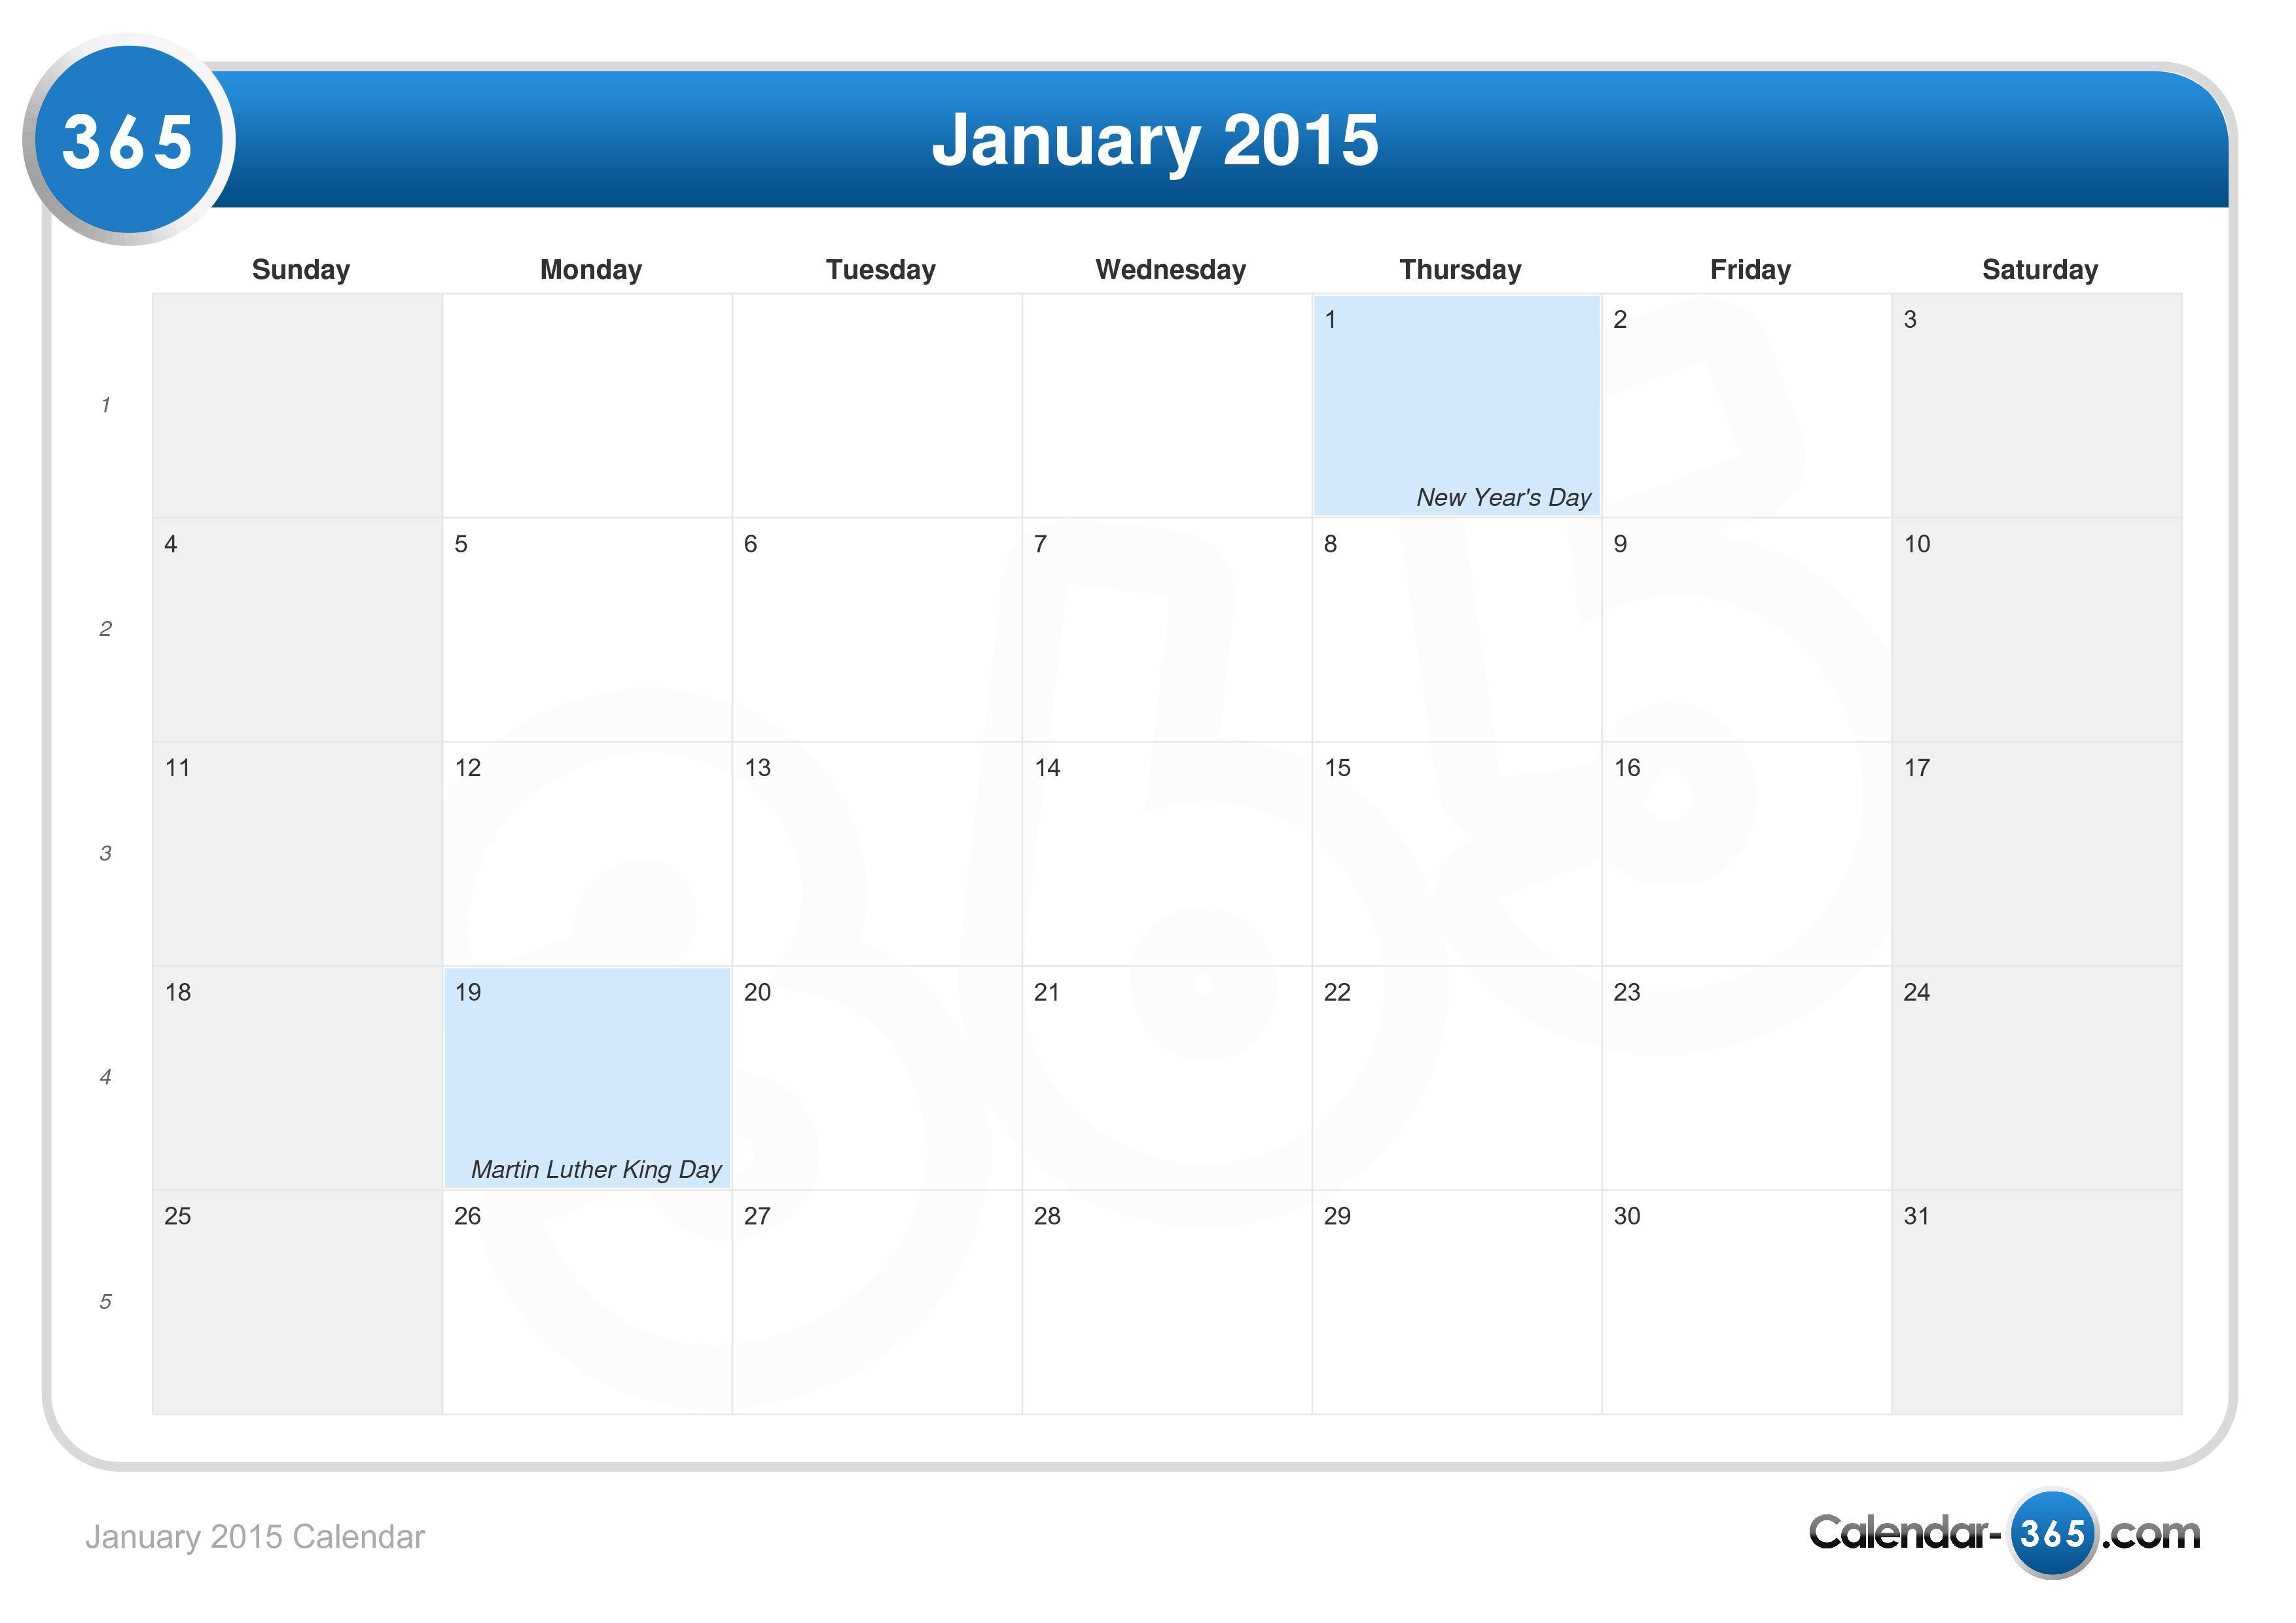 January 2015 Calendar With Holidays